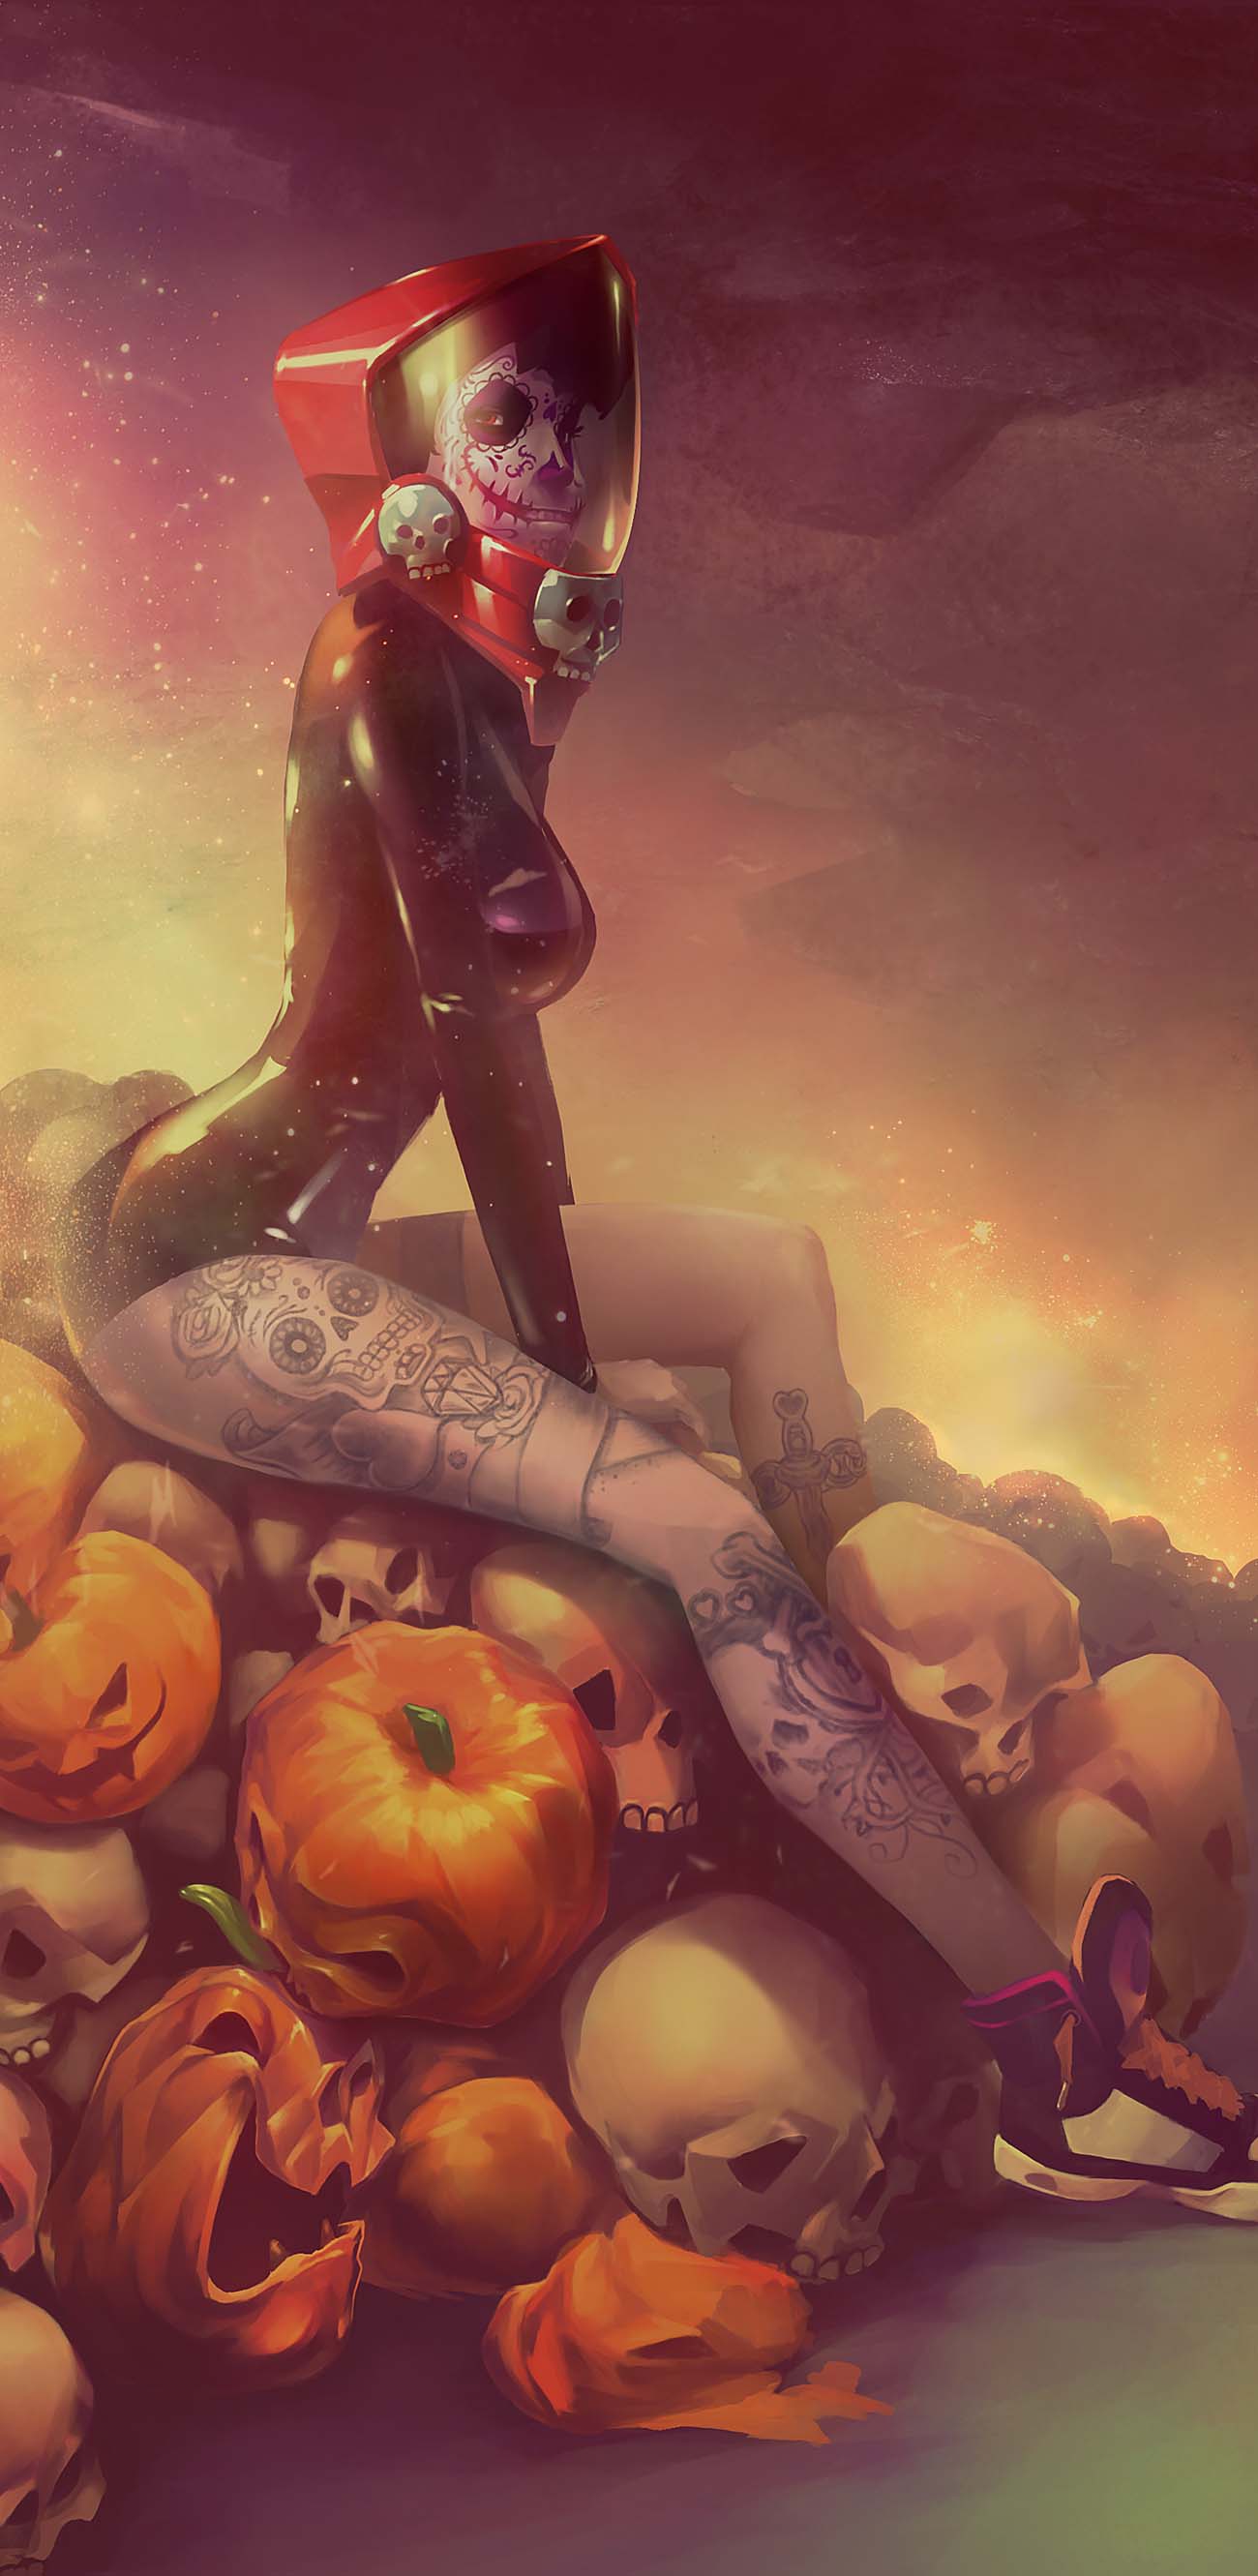 Kellen Carranza | Paintable.cc 25 Spooky Halloween Digital Paintings to Give You Nightmares! #digitalpainting #digitalart #halloween